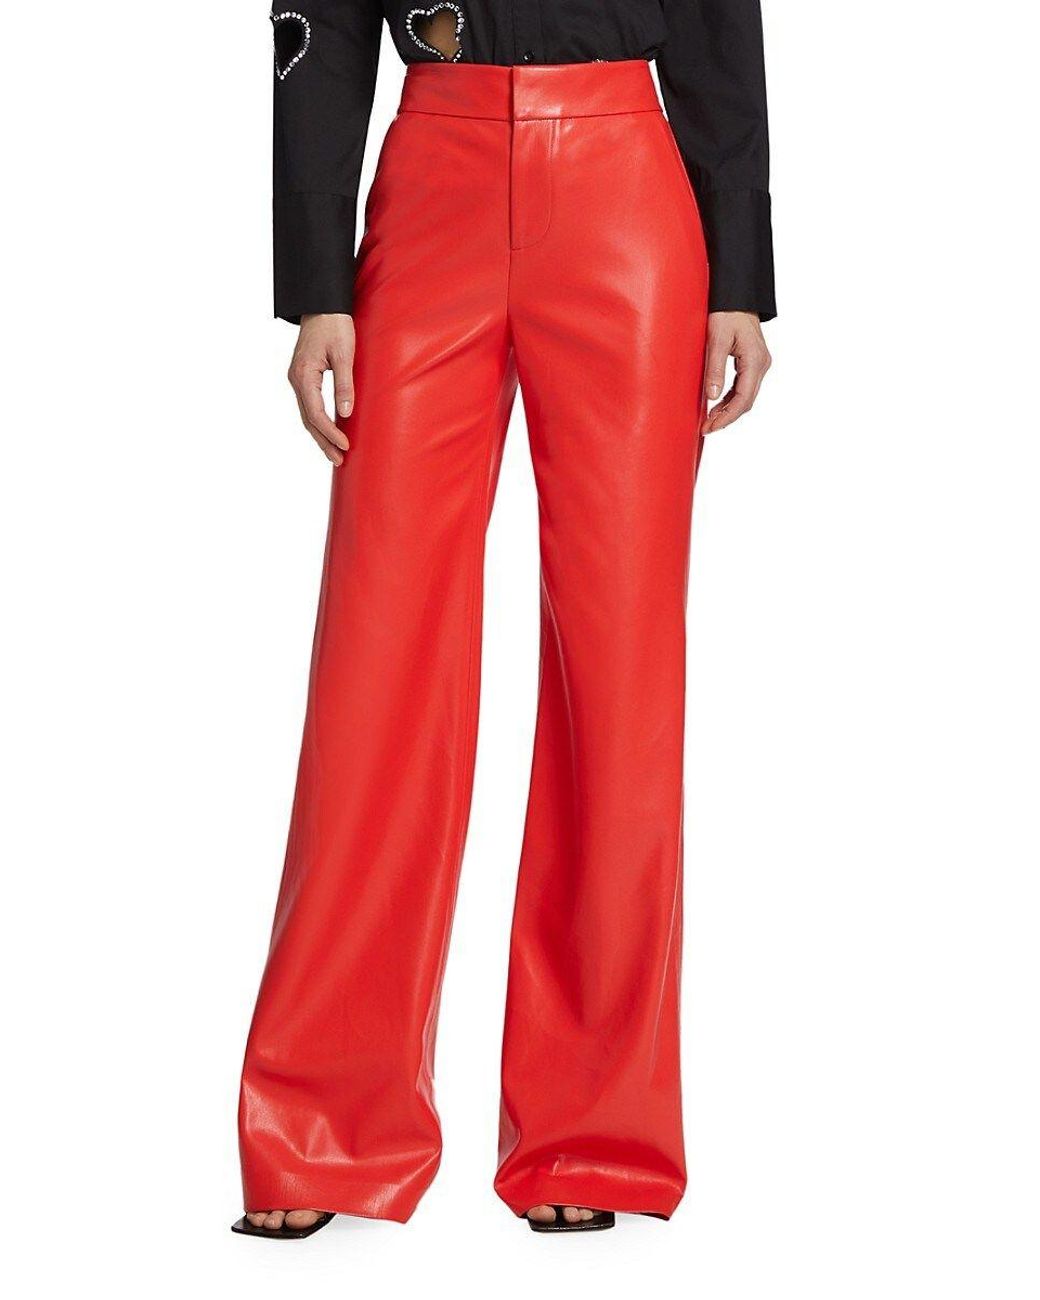 Alice + Olivia Alice + Olivia Deanna Vegan Leather Pants in Red | Lyst